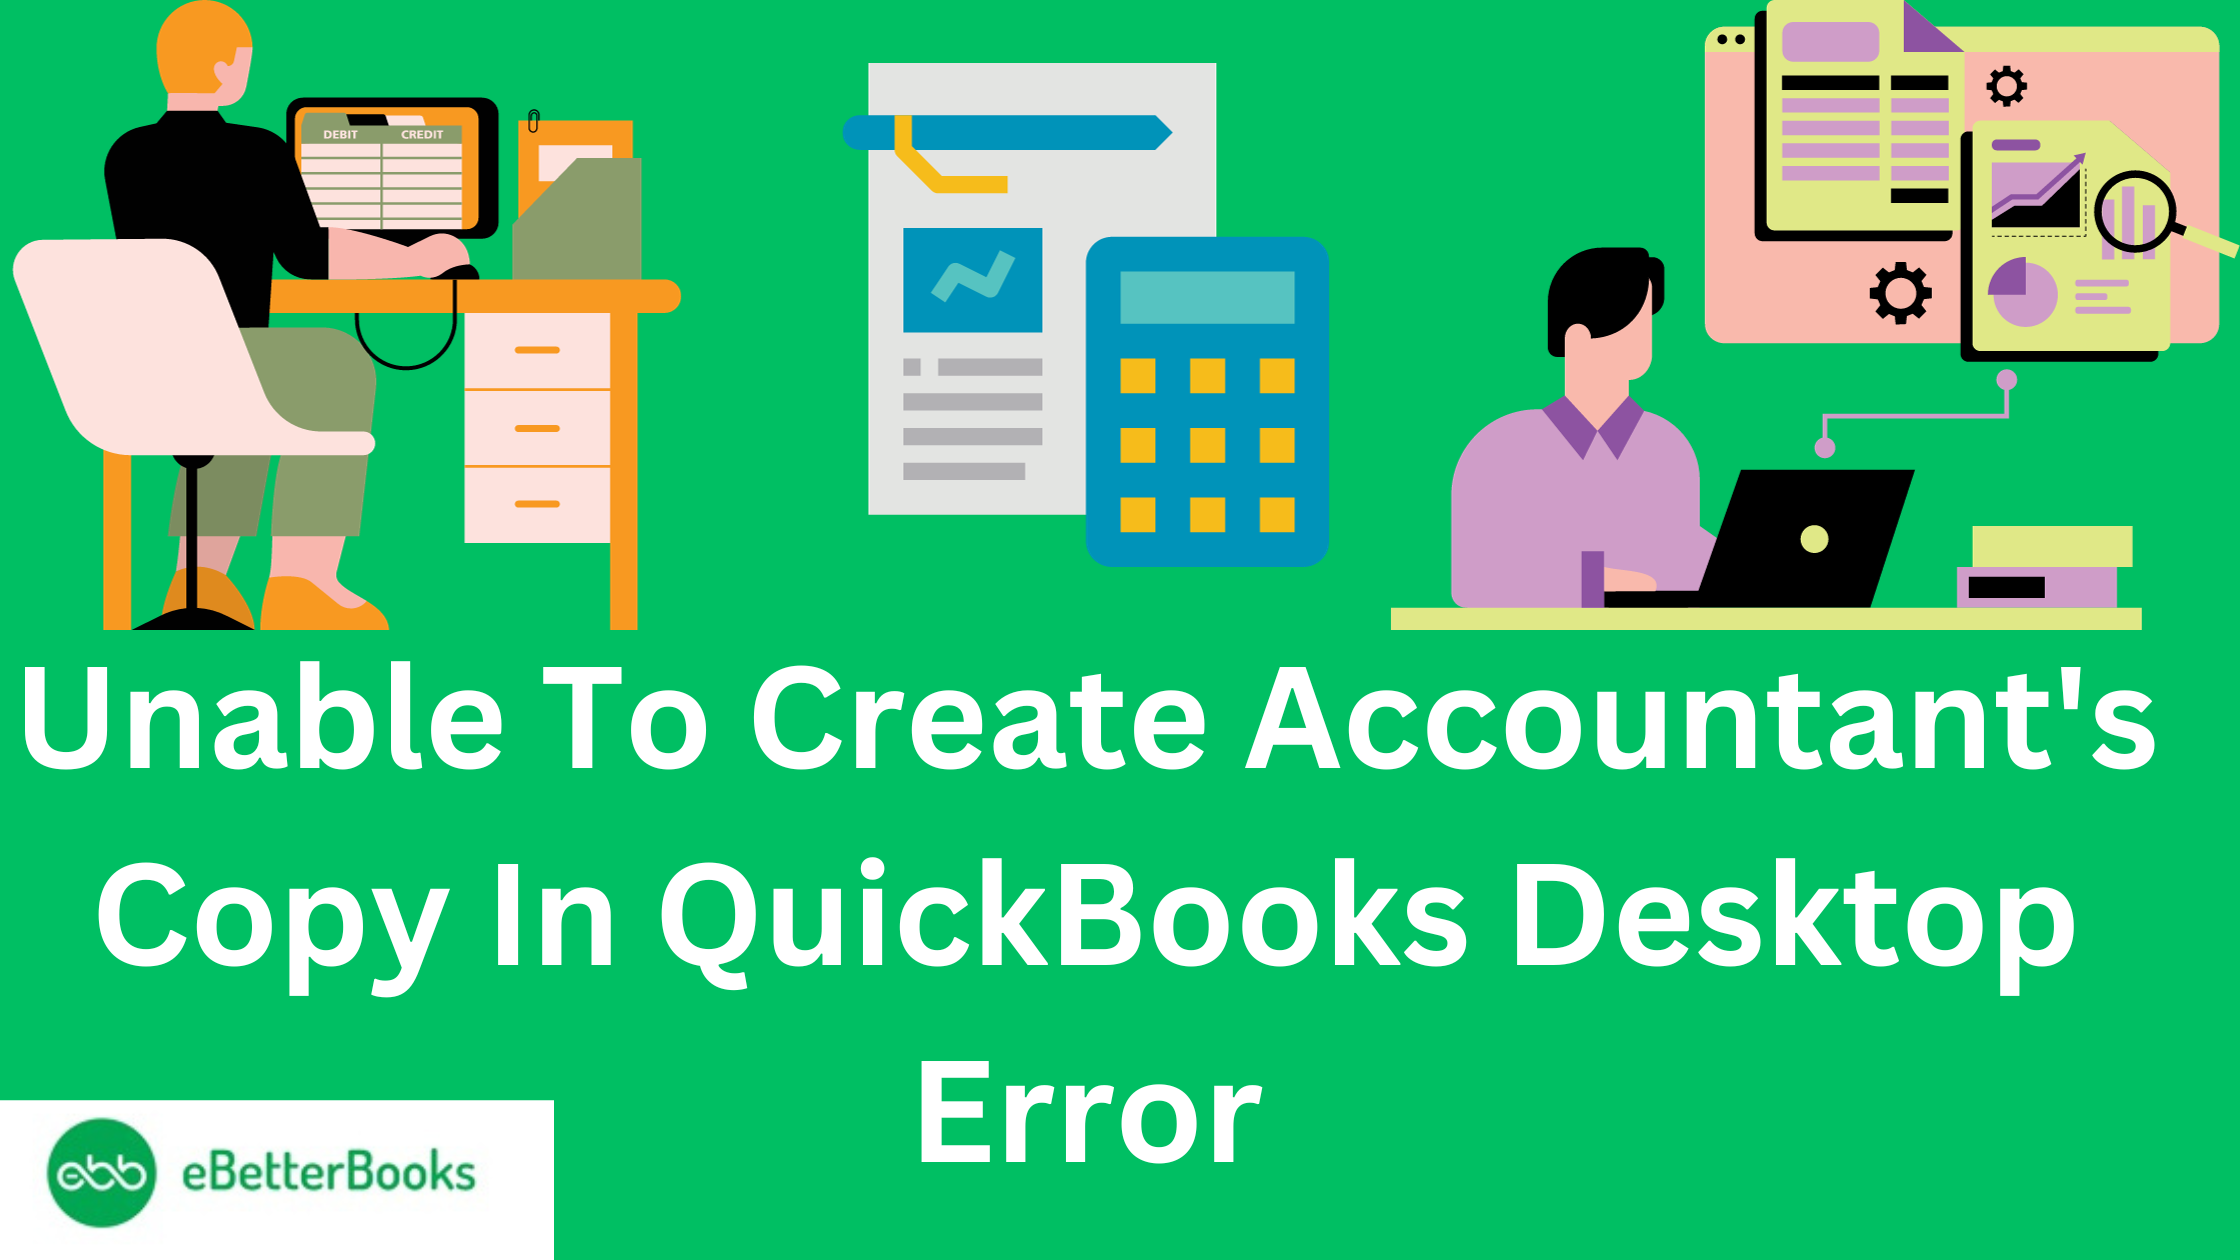 Unable To Create Accountant's Copy In QuickBooks Desktop Error